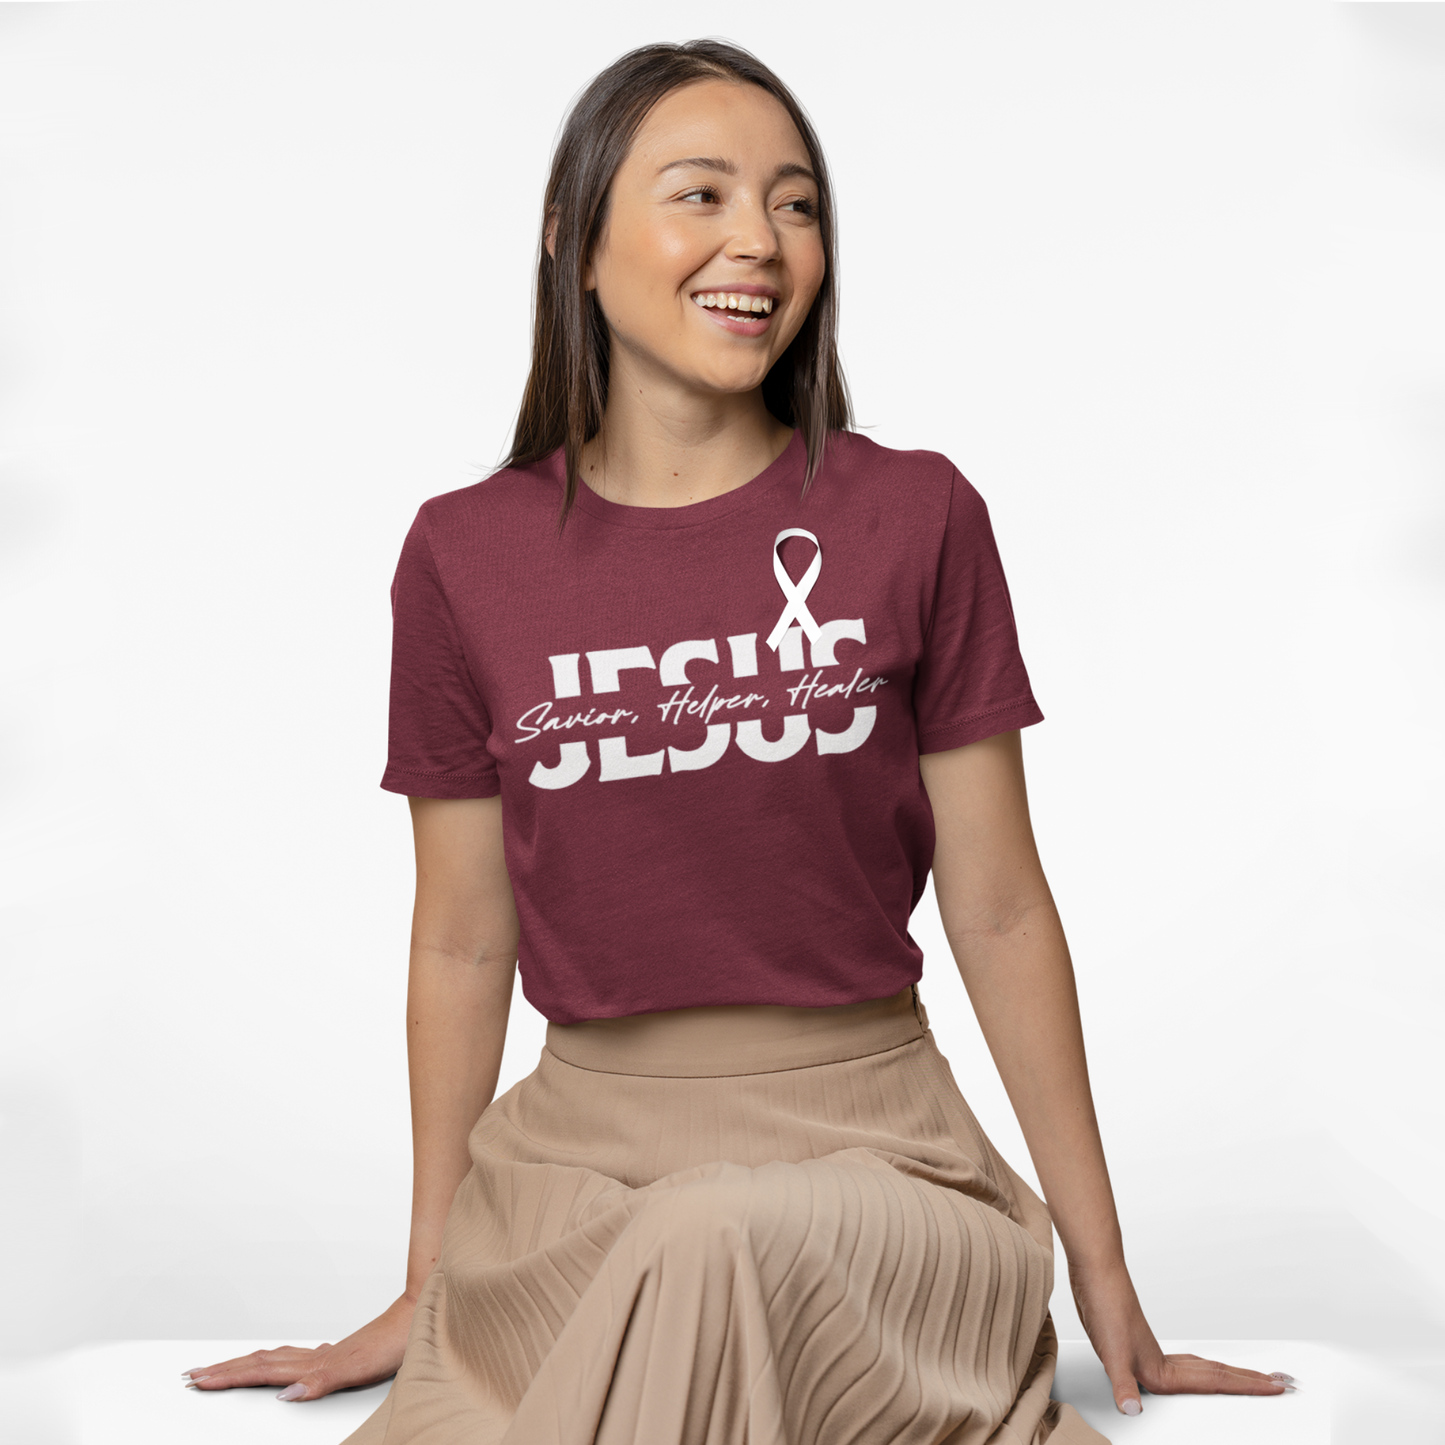 Jesus - Savior, Helper, Healer T-Shirt - GladEyze Apparel